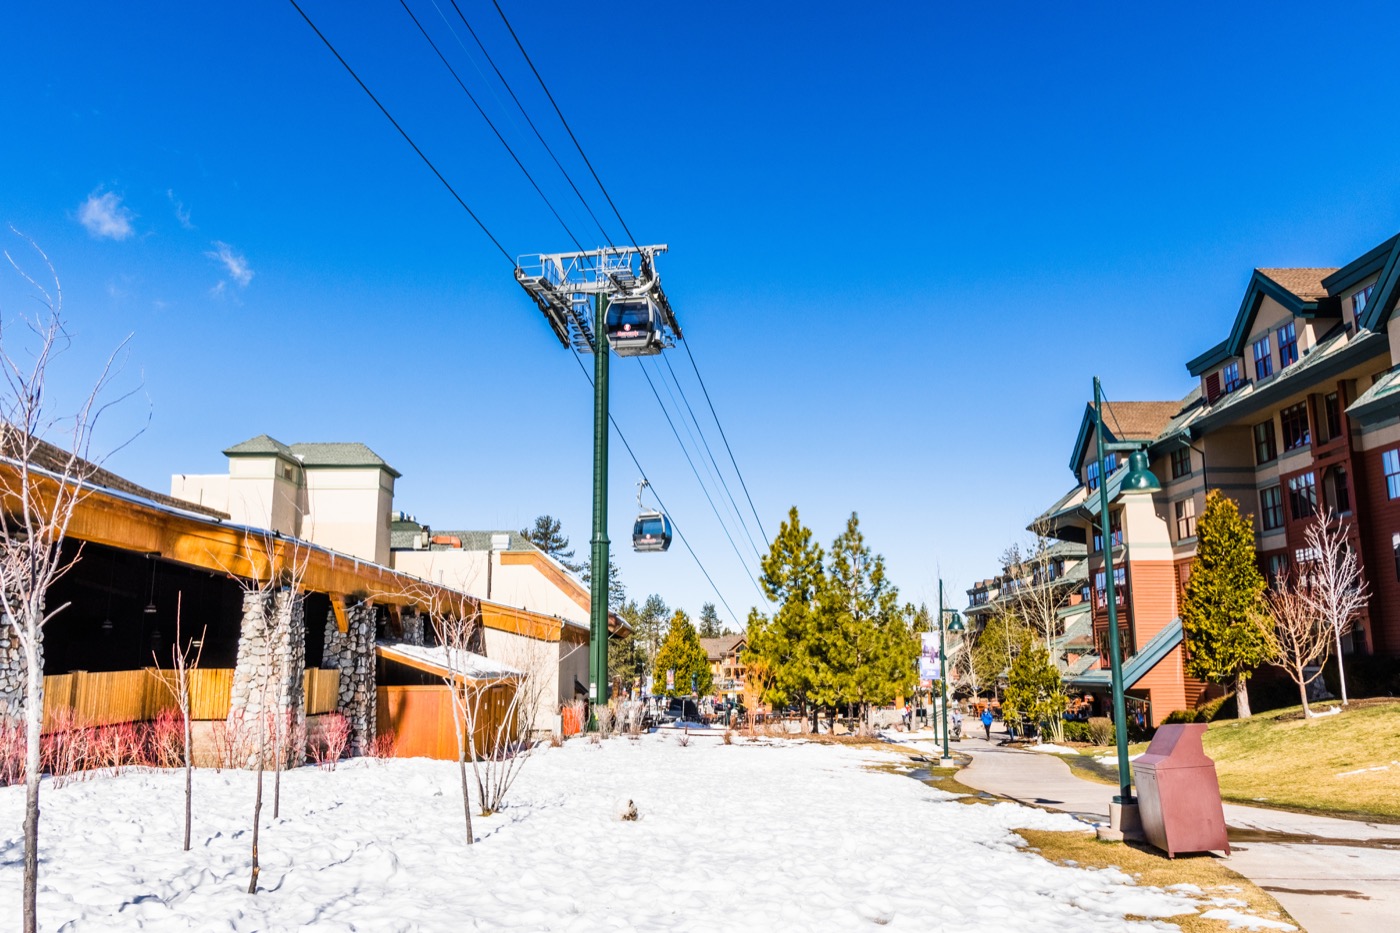 March 23, 2018 South Lake Tahoe / CA / USA - Heavenly ski resort Gondola travelling between the town's buildings